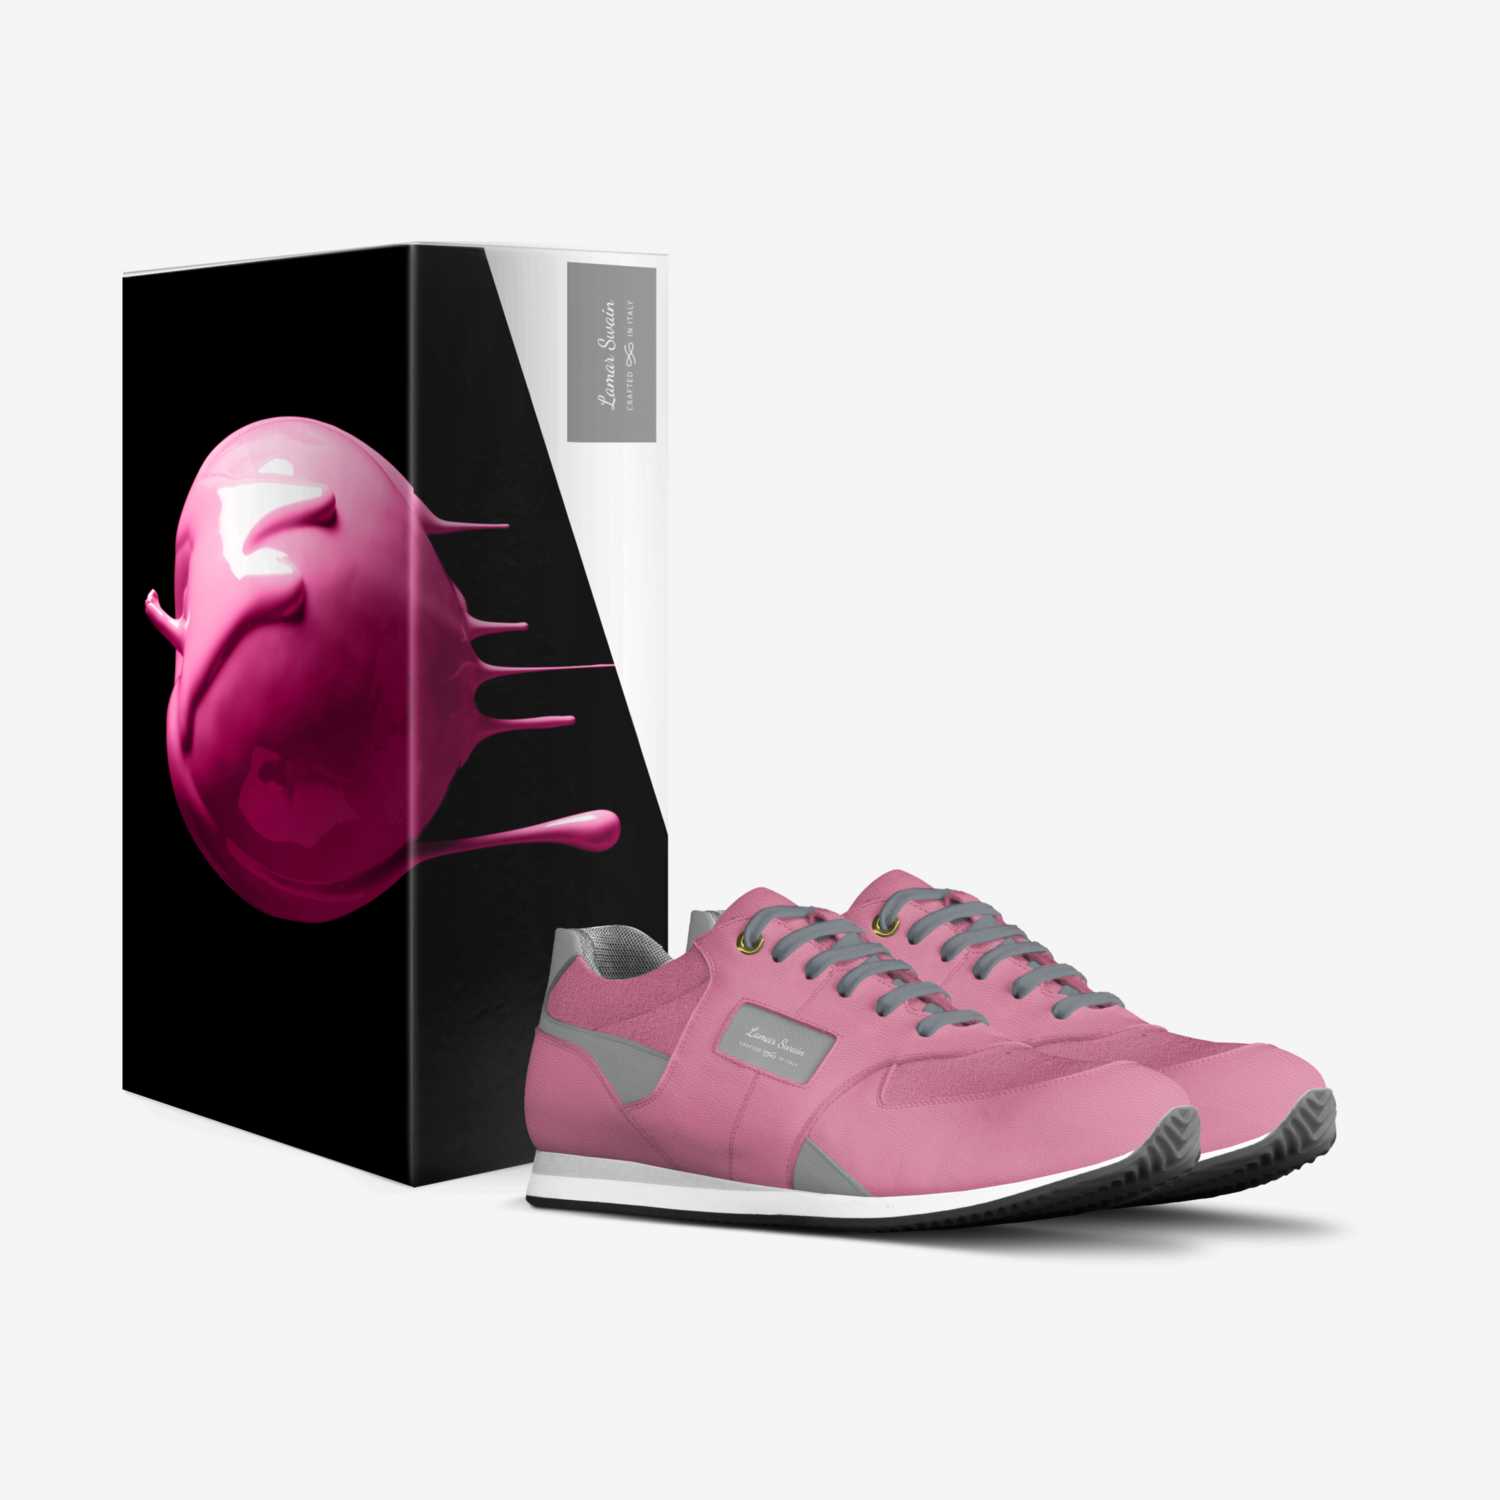 Lamar Swain custom made in Italy shoes by Lamar Swain | Box view